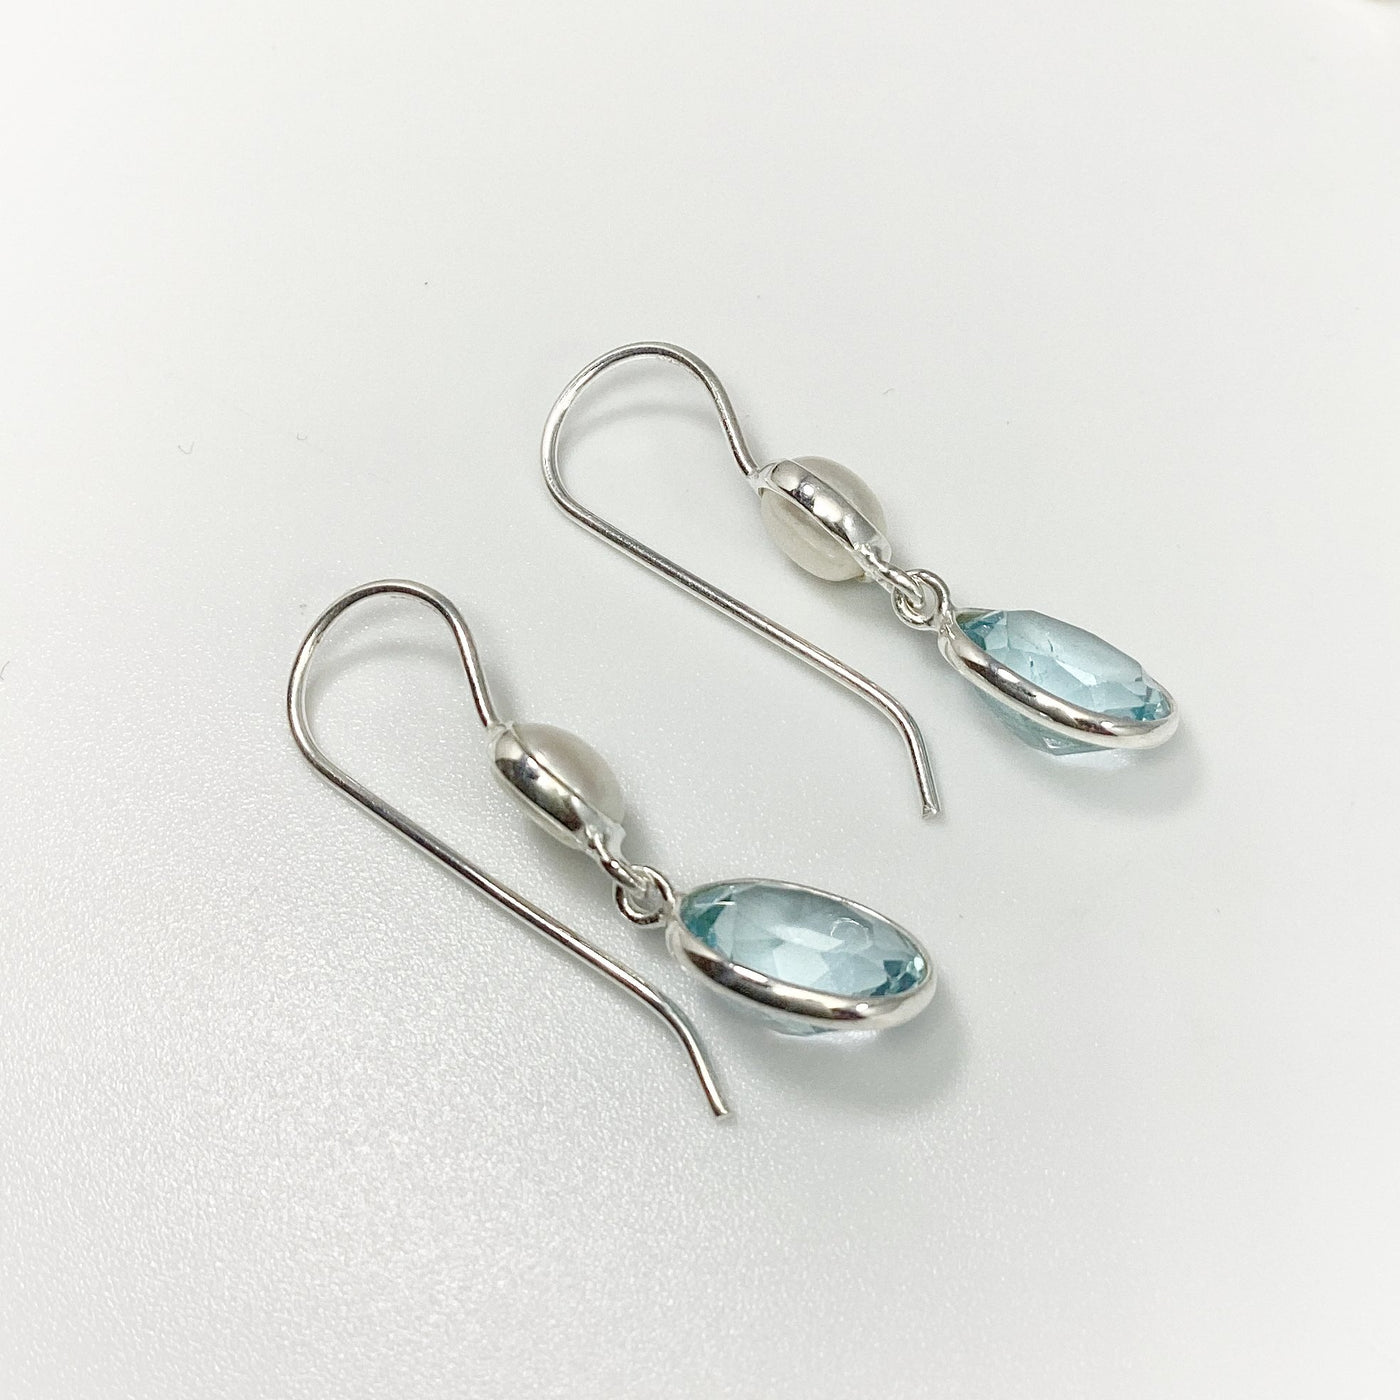 Blue Topaz and Pearl Dangle Earrings